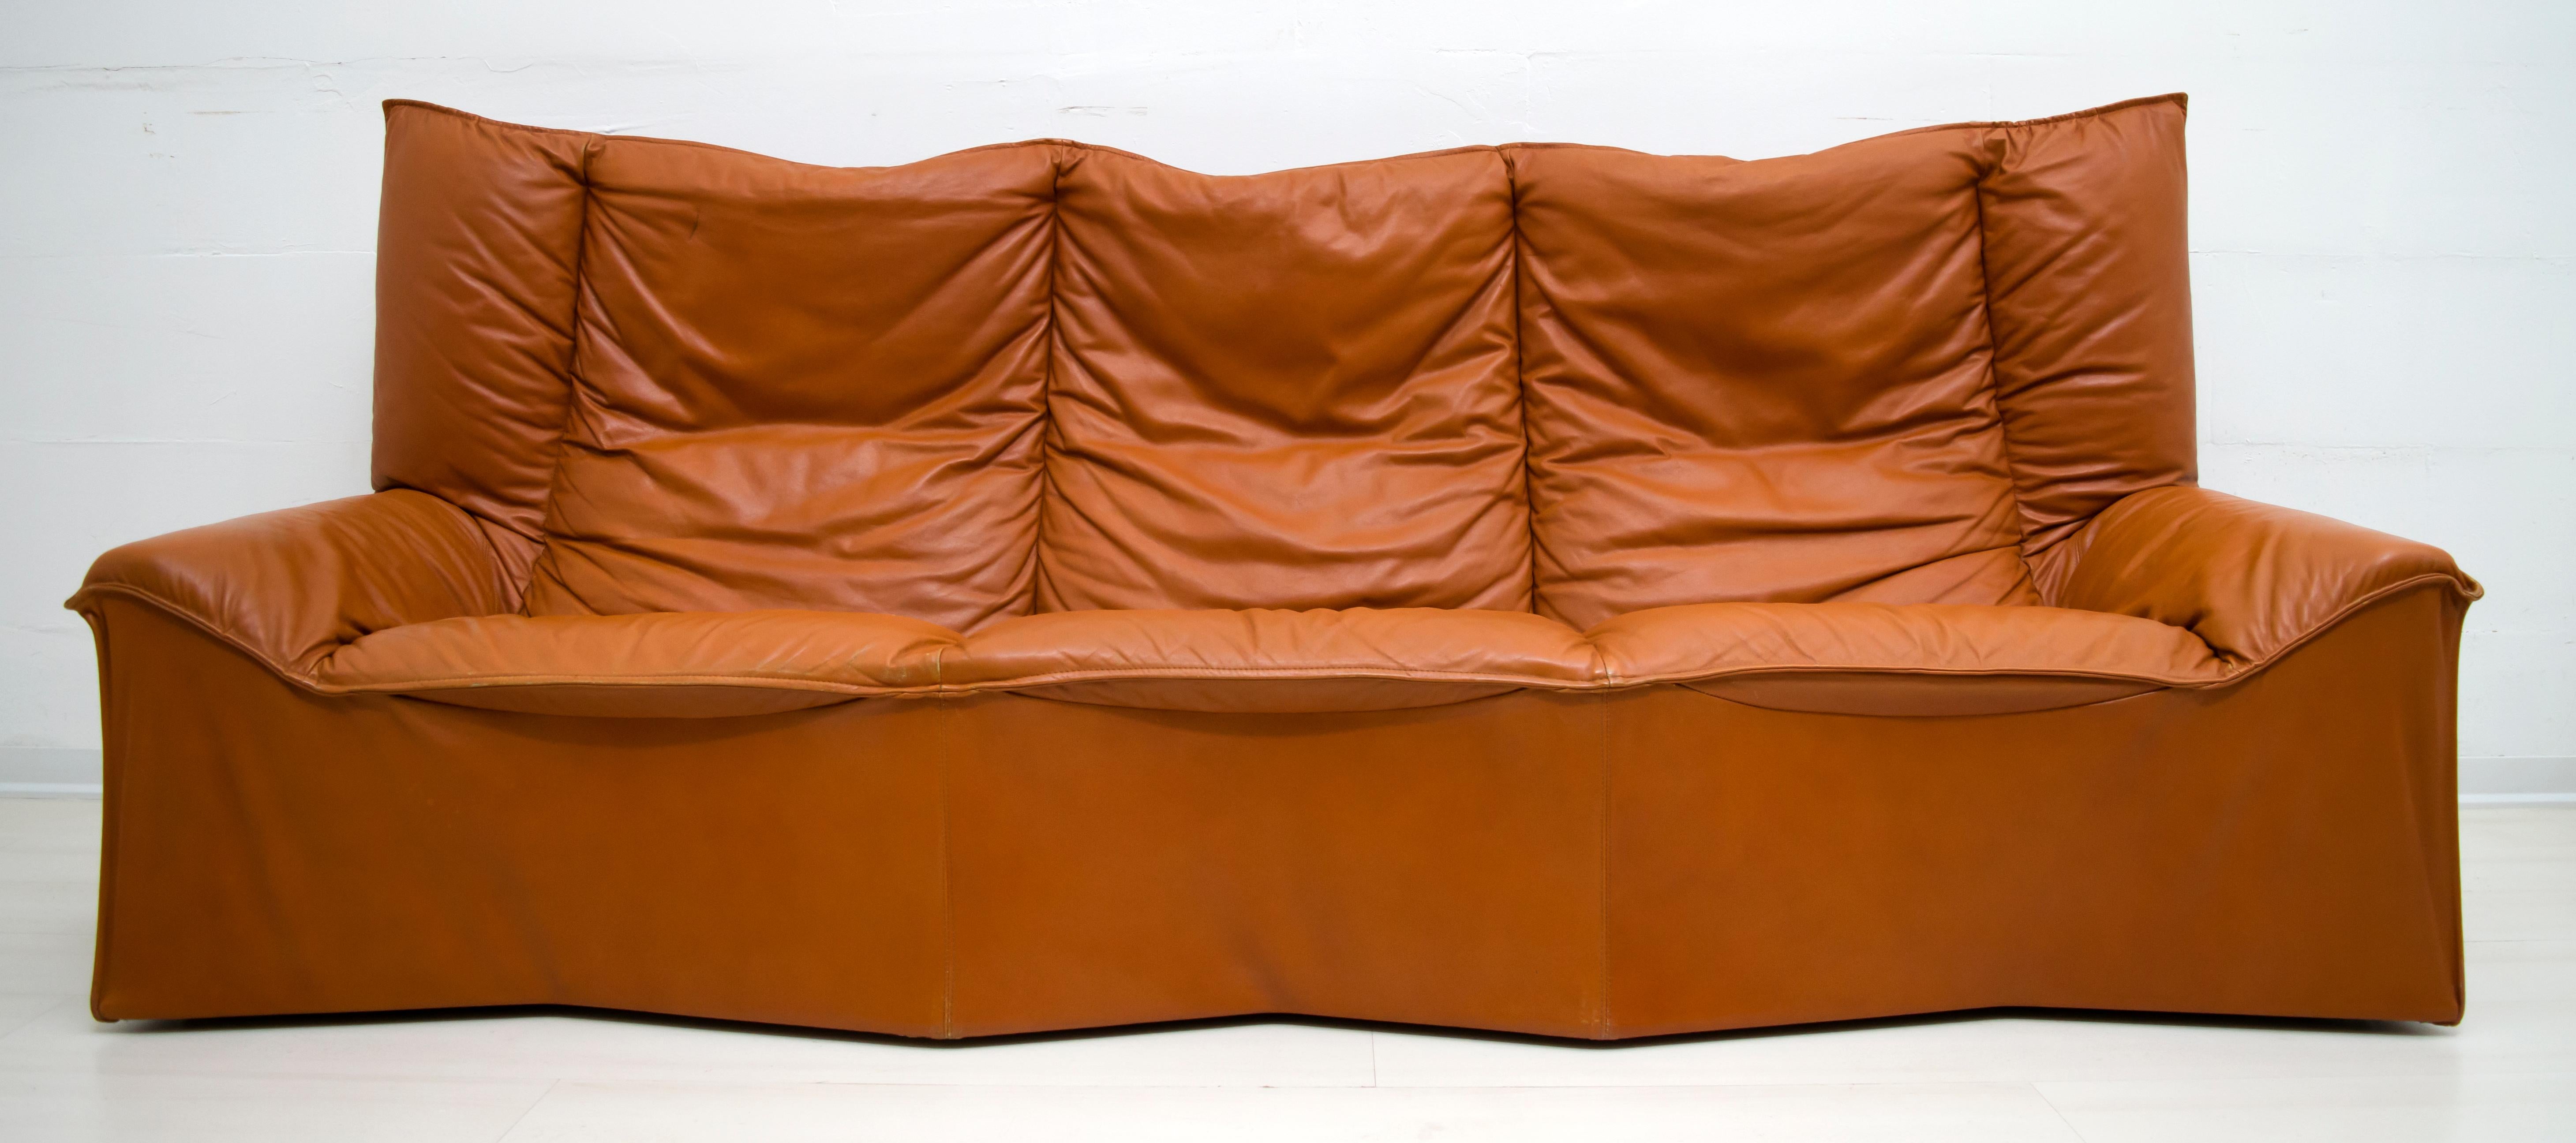 This sofa upholstered in genuine leather-colored leather were produced by the famous Italian company Cinova, in the 1960s.
Cinova made use of the collaboration of great designs such as: Carlo de Carli, Tito Agnoli, Menilio Taro, Sergio Mazza and